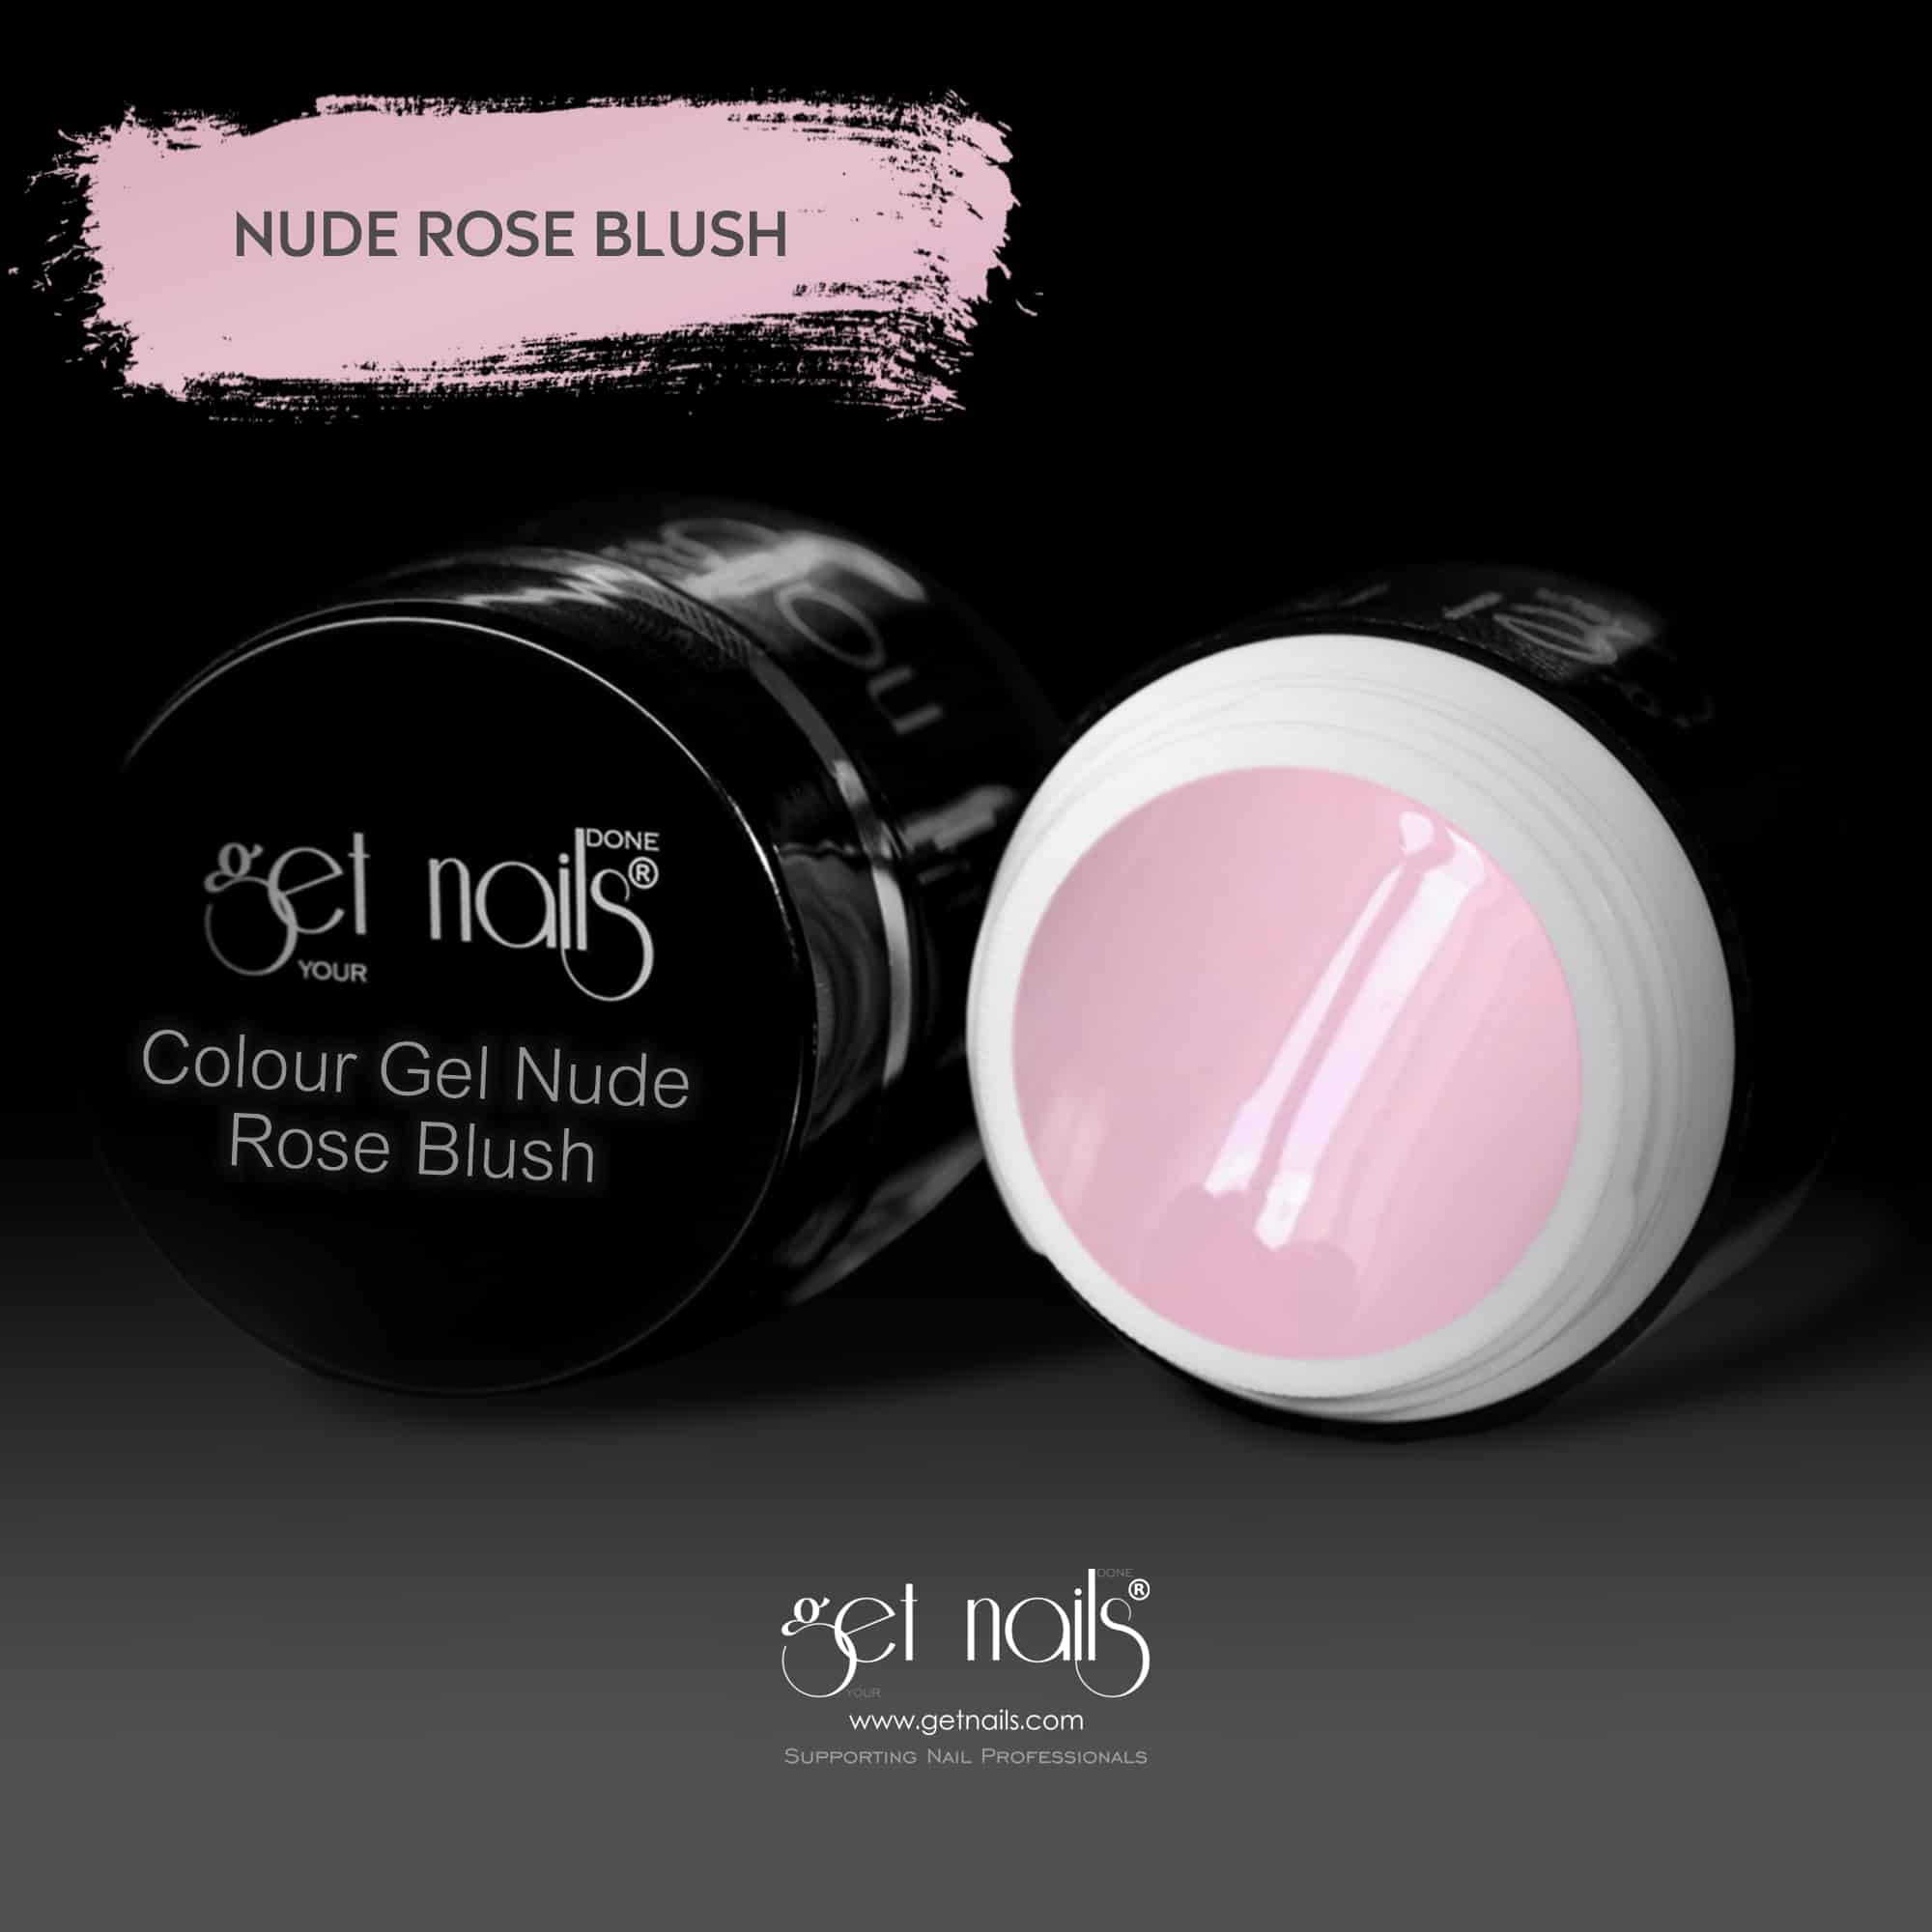 Get Nails Austria - Colour Gel Nude Rose Blush 5g